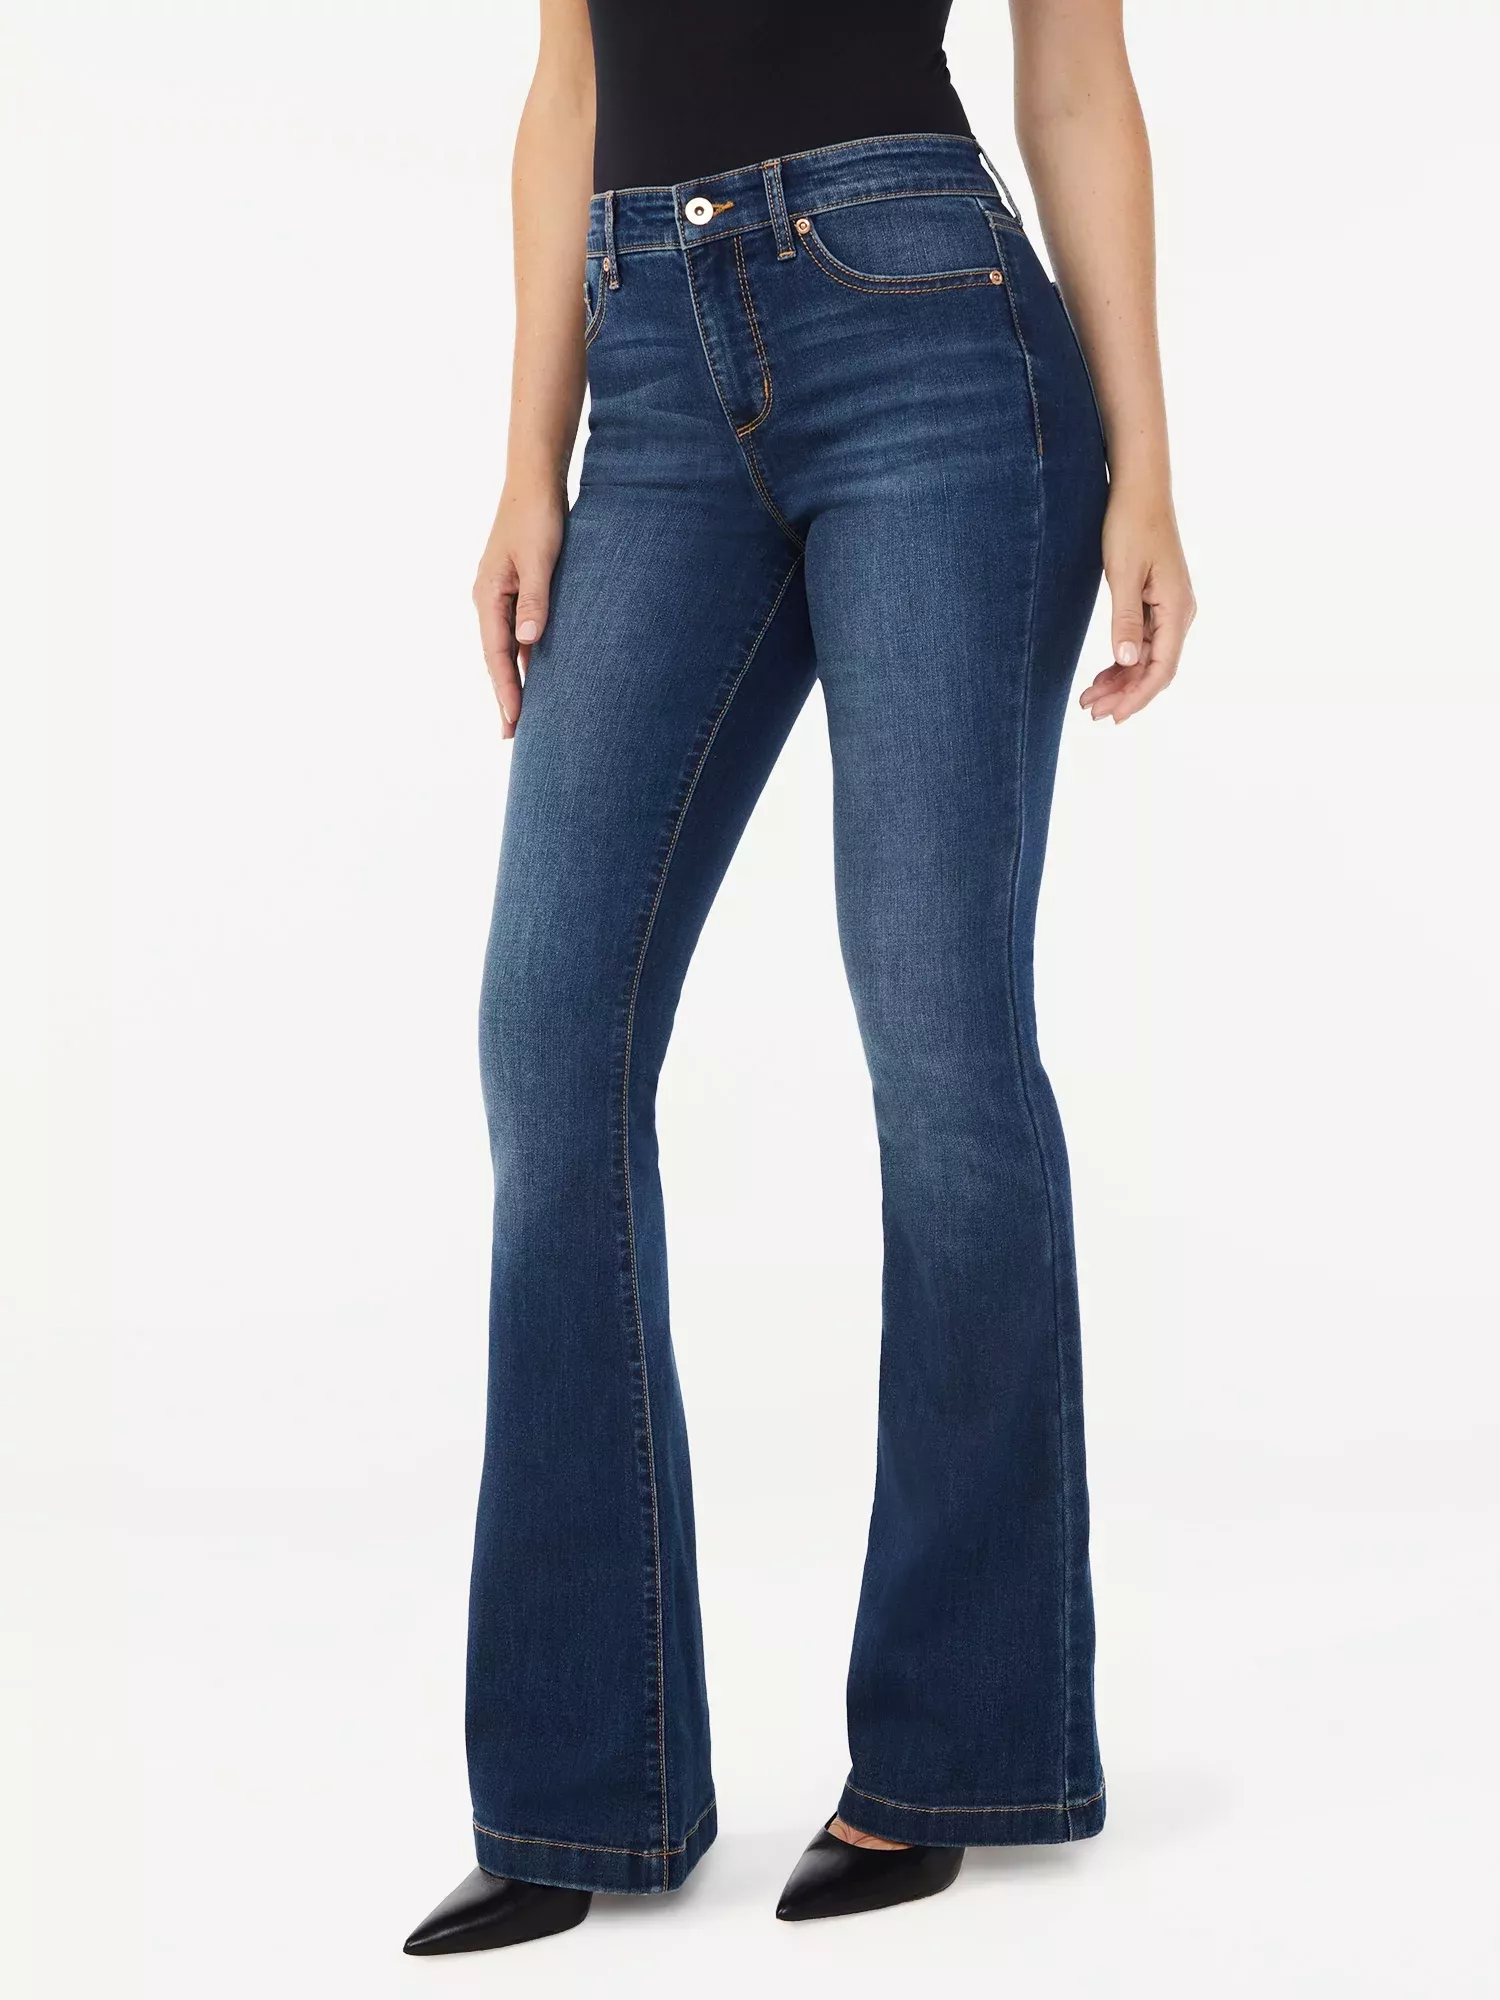 Sofia Jeans Women's Melisa Flare High Rise Jeans